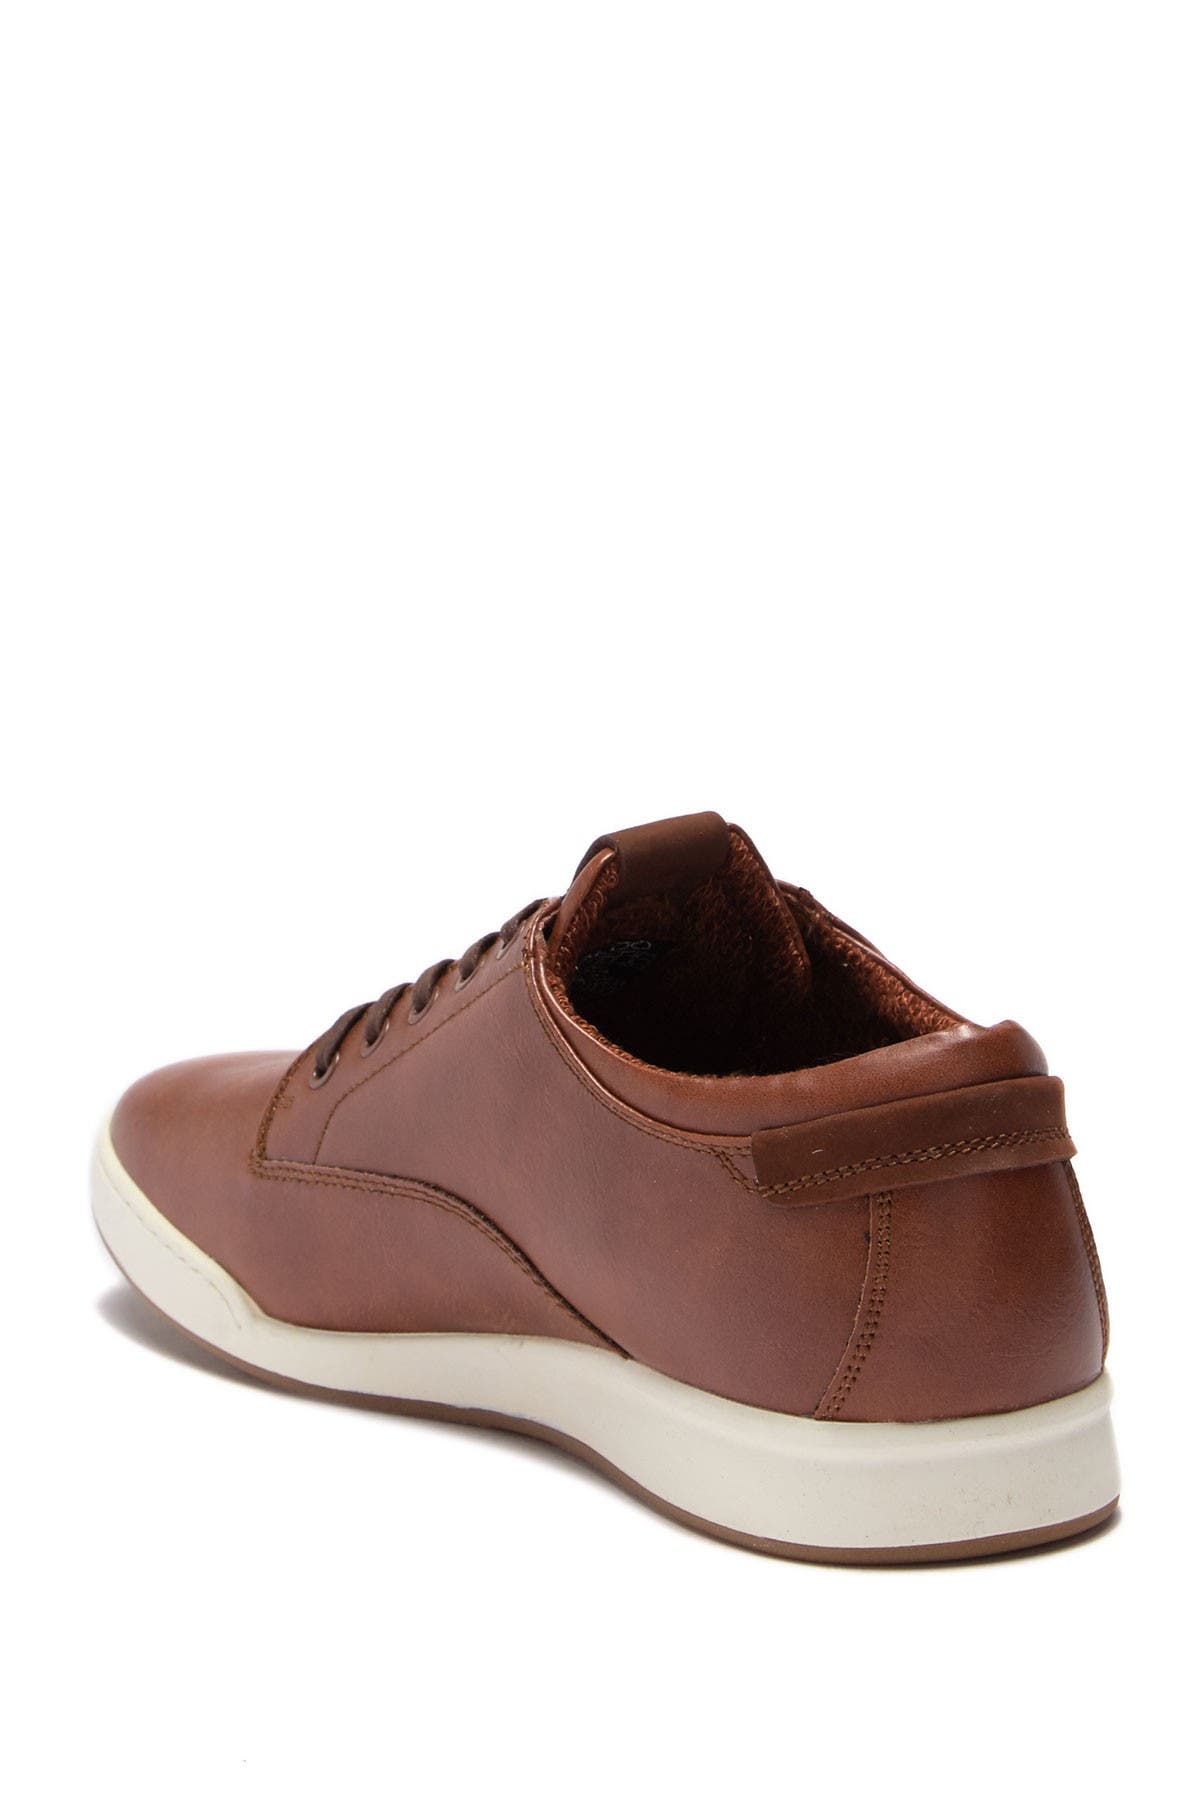 Aldo | Nerrawia Plain Toe Sneaker 